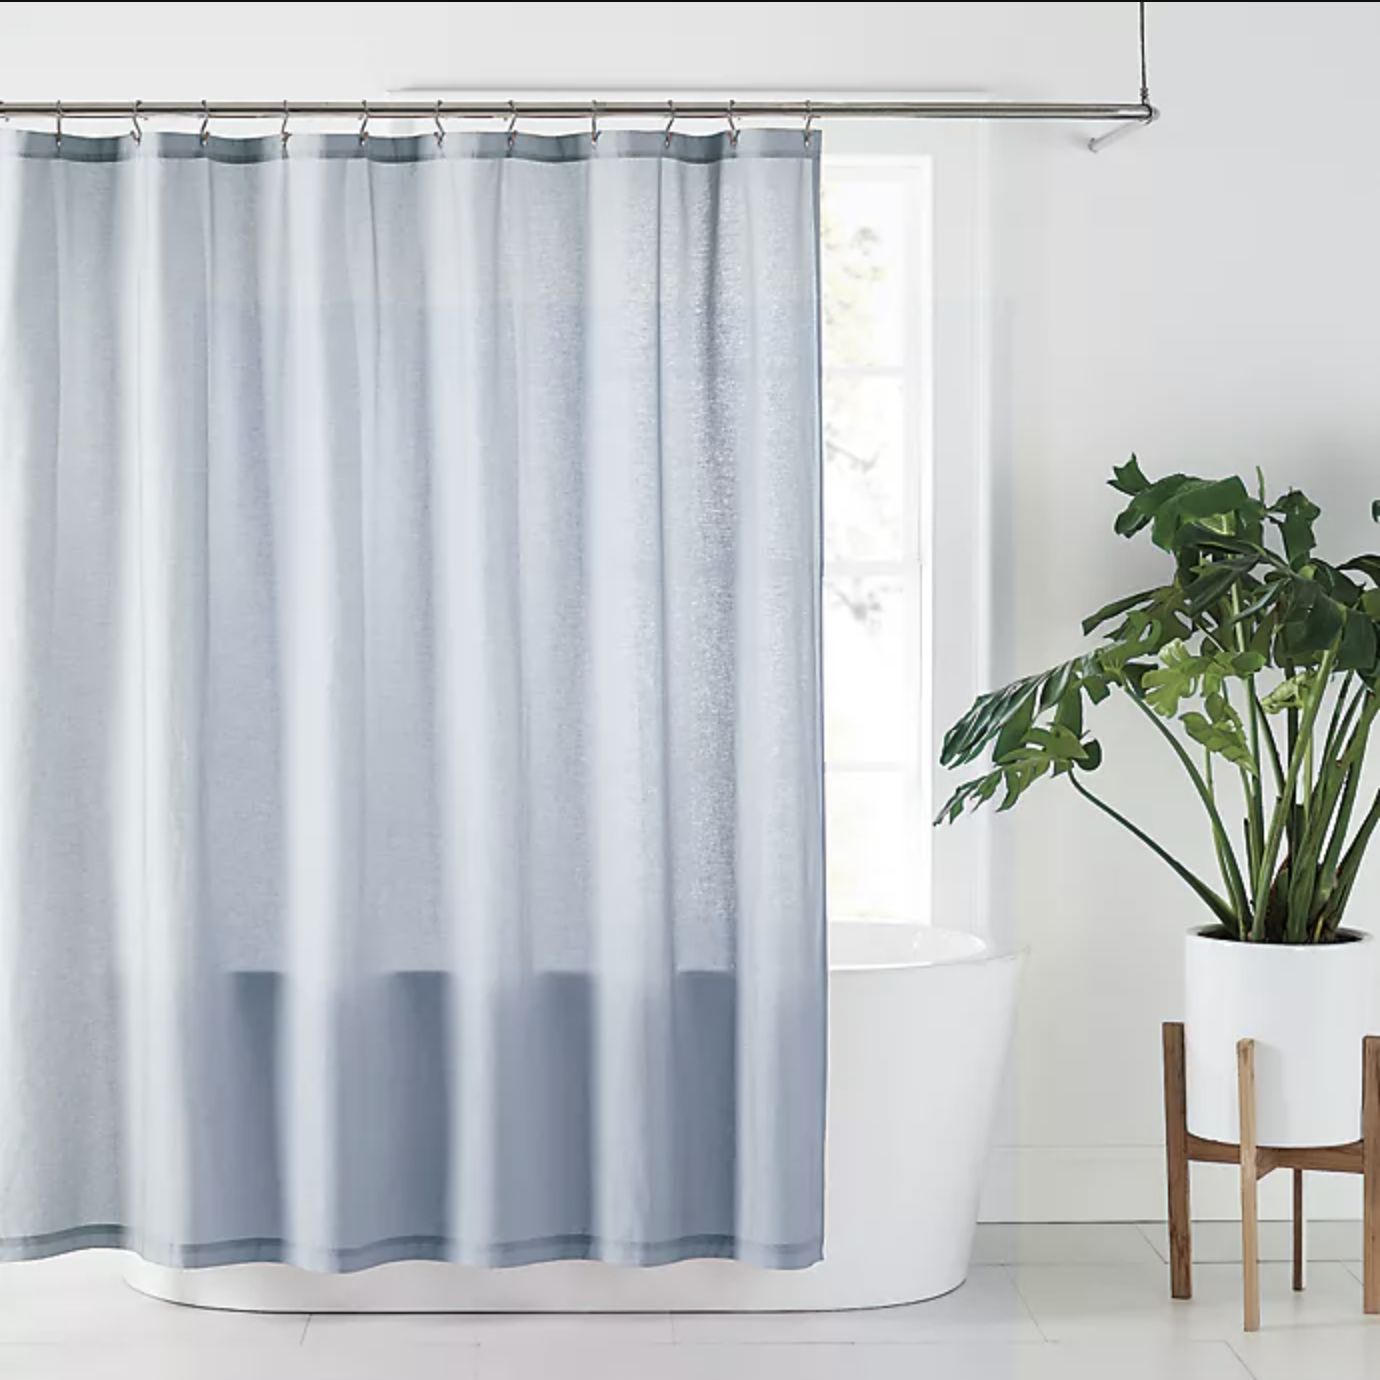 Hemp Shower Curtain | $27